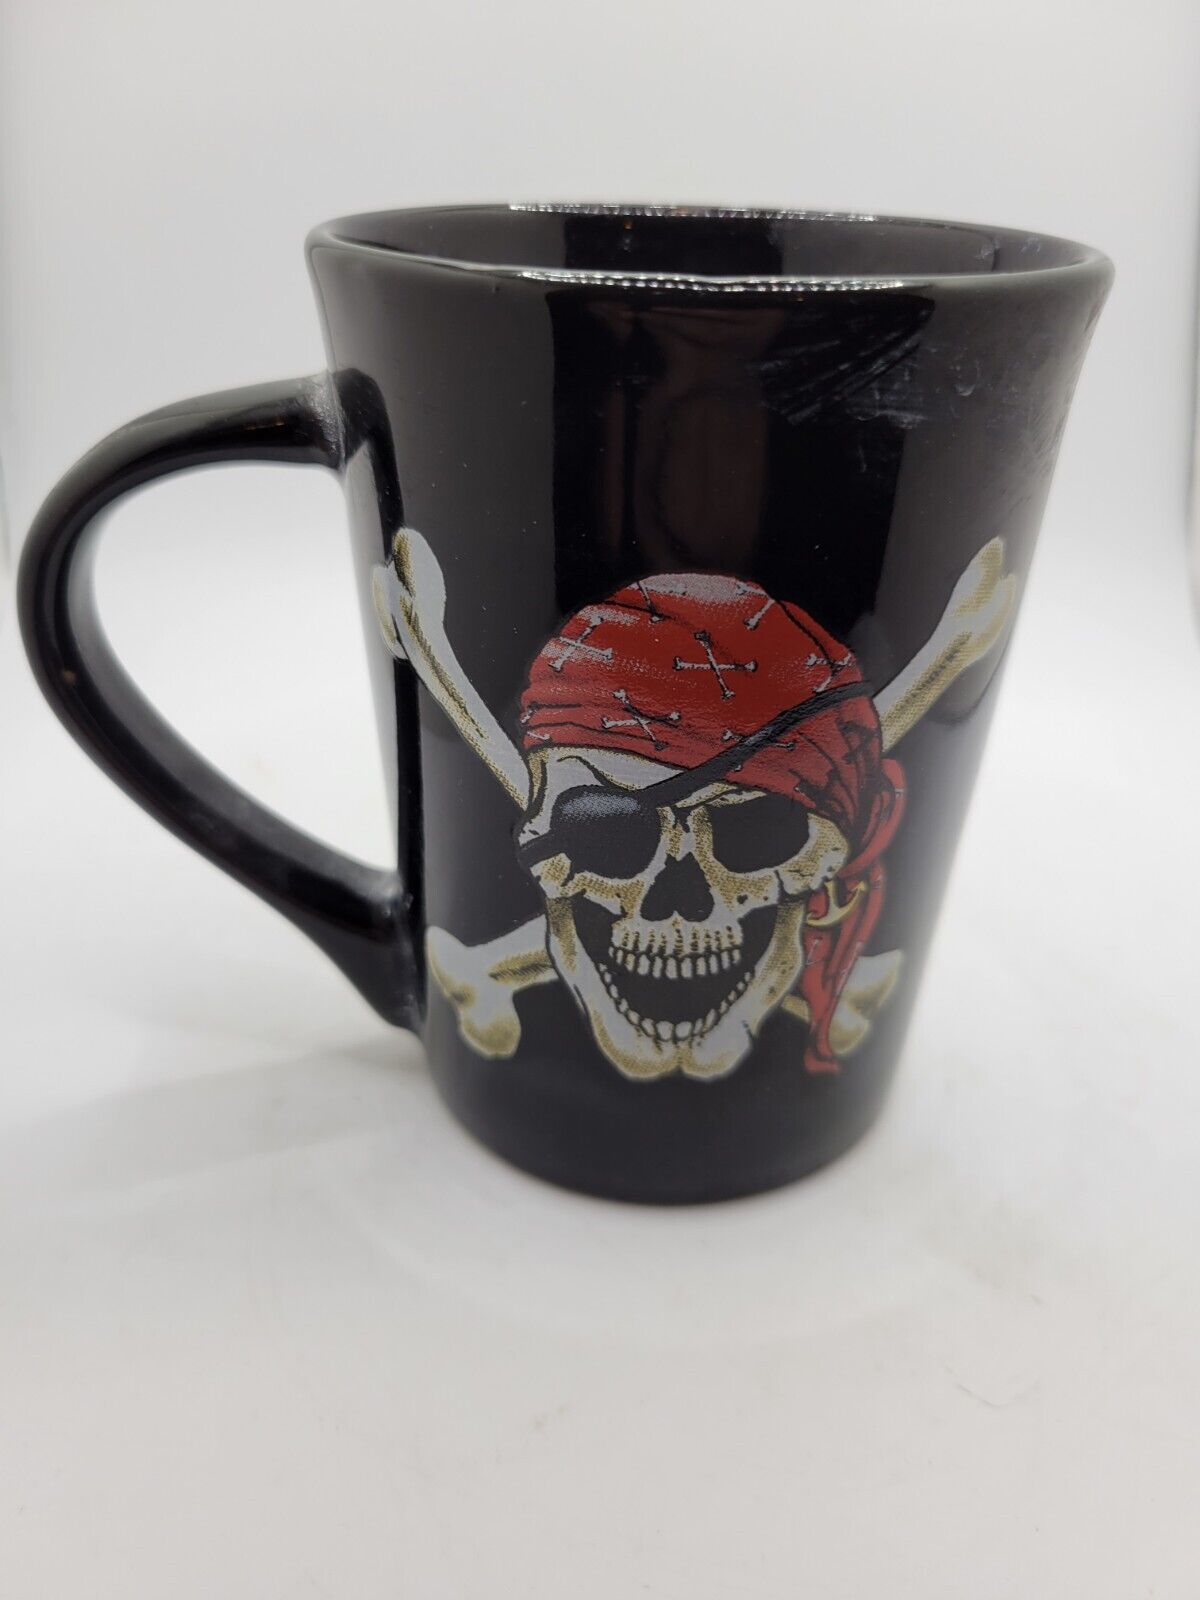 Vintage Royal Norfork 12 oz coffee mug/ Pirates of the Carribean